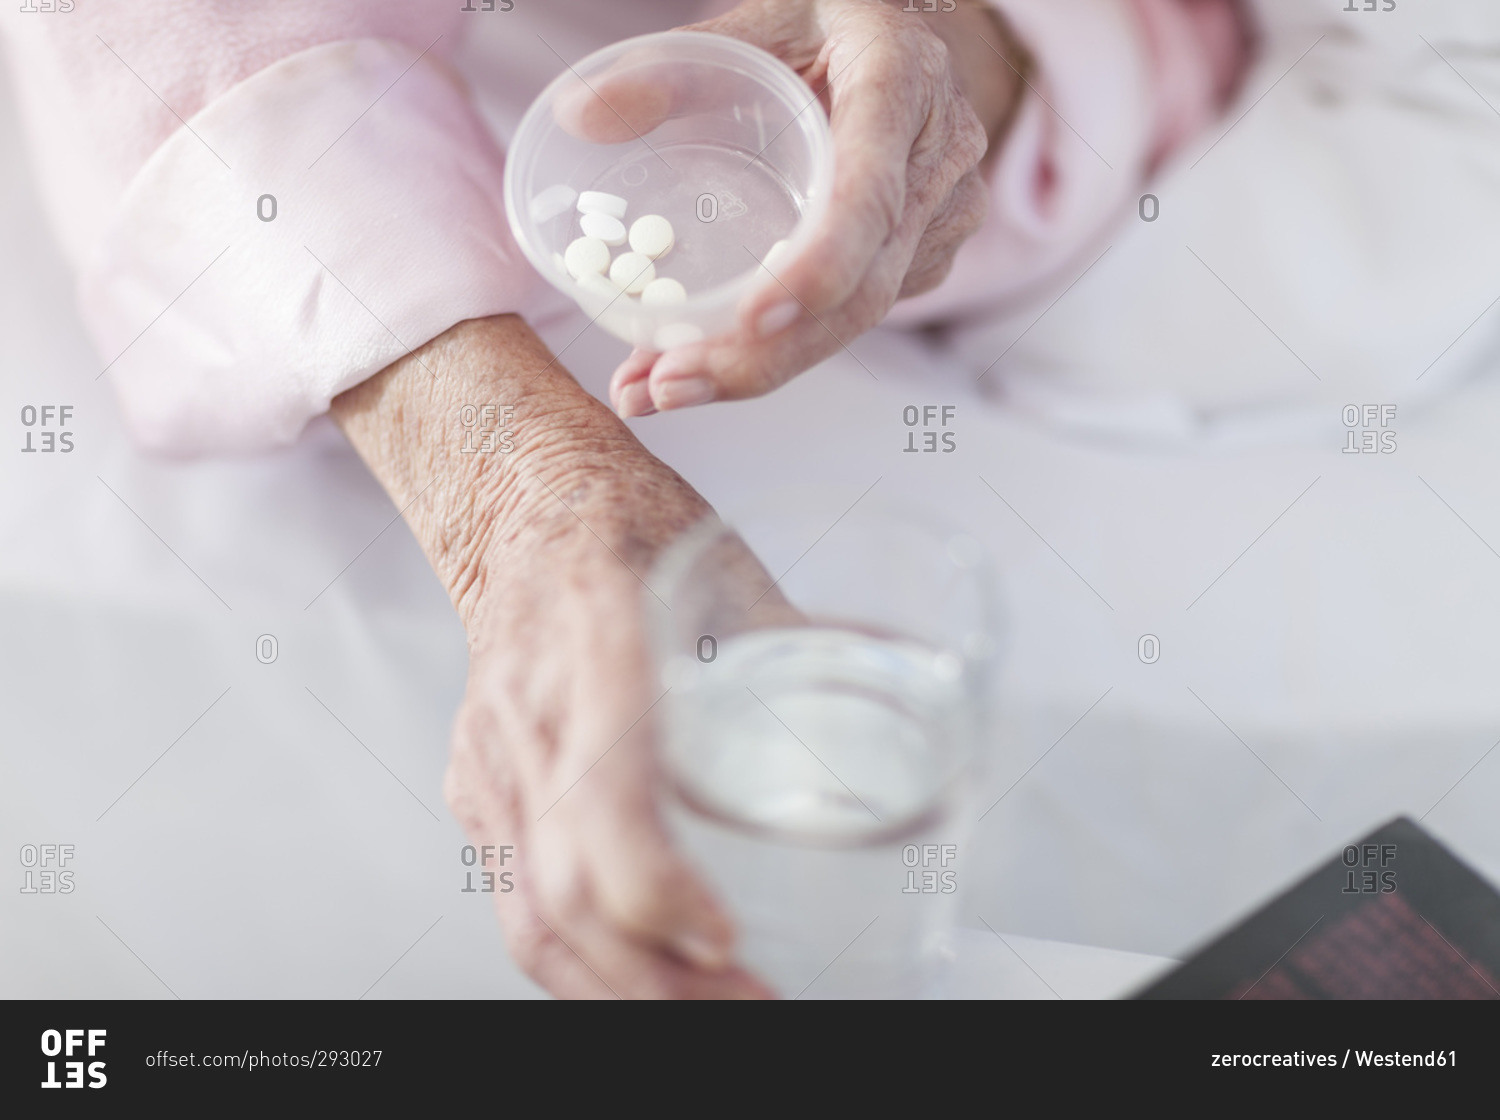 Patient taking medication